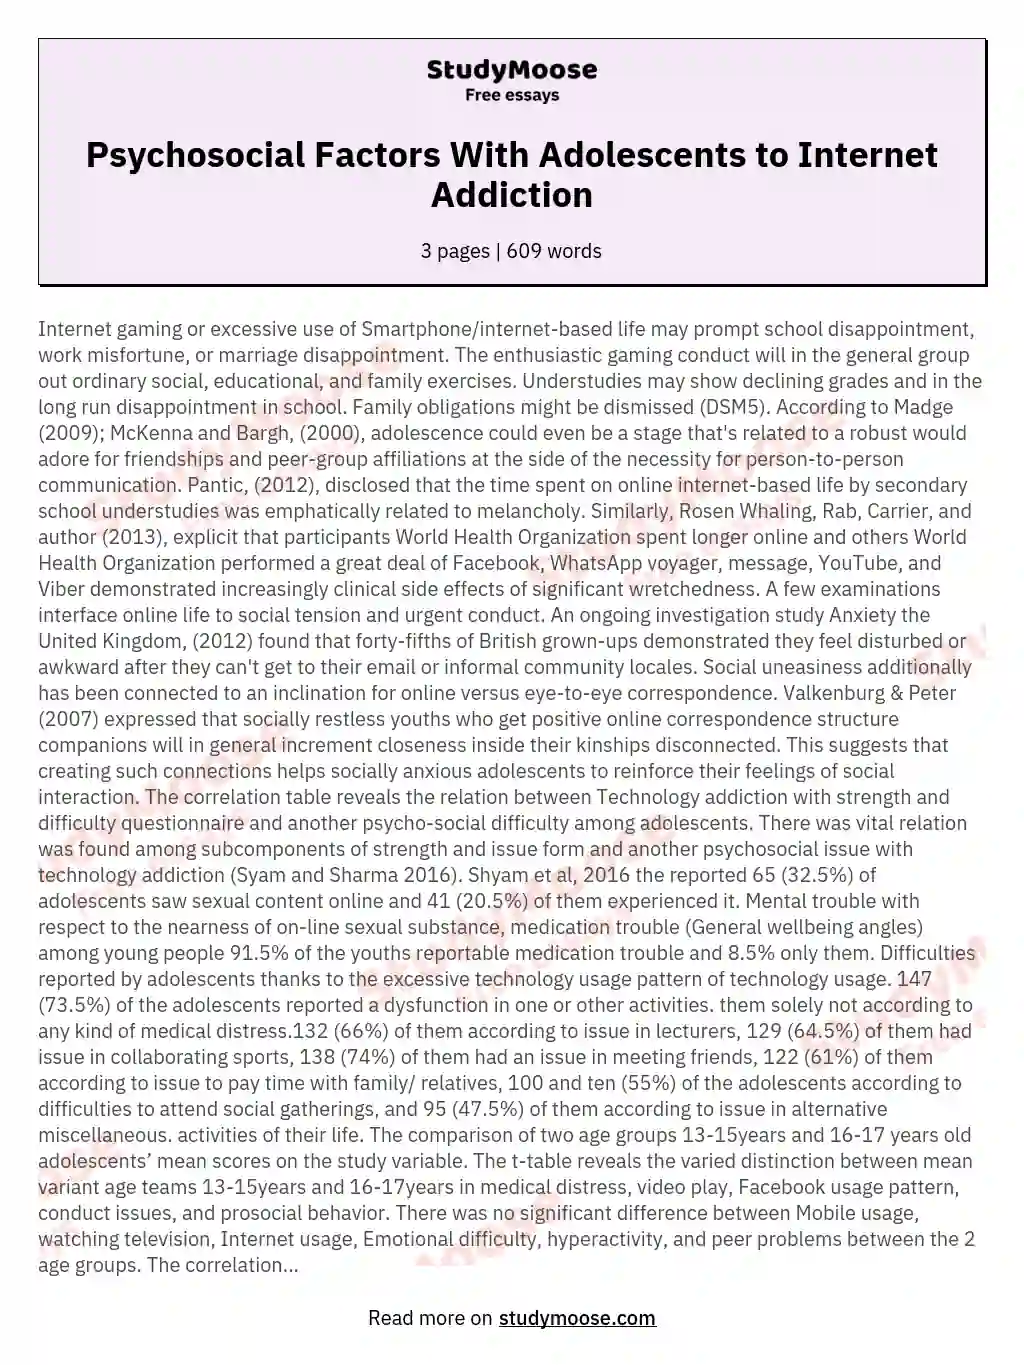 Psychosocial Factors With Adolescents to Internet Addiction essay